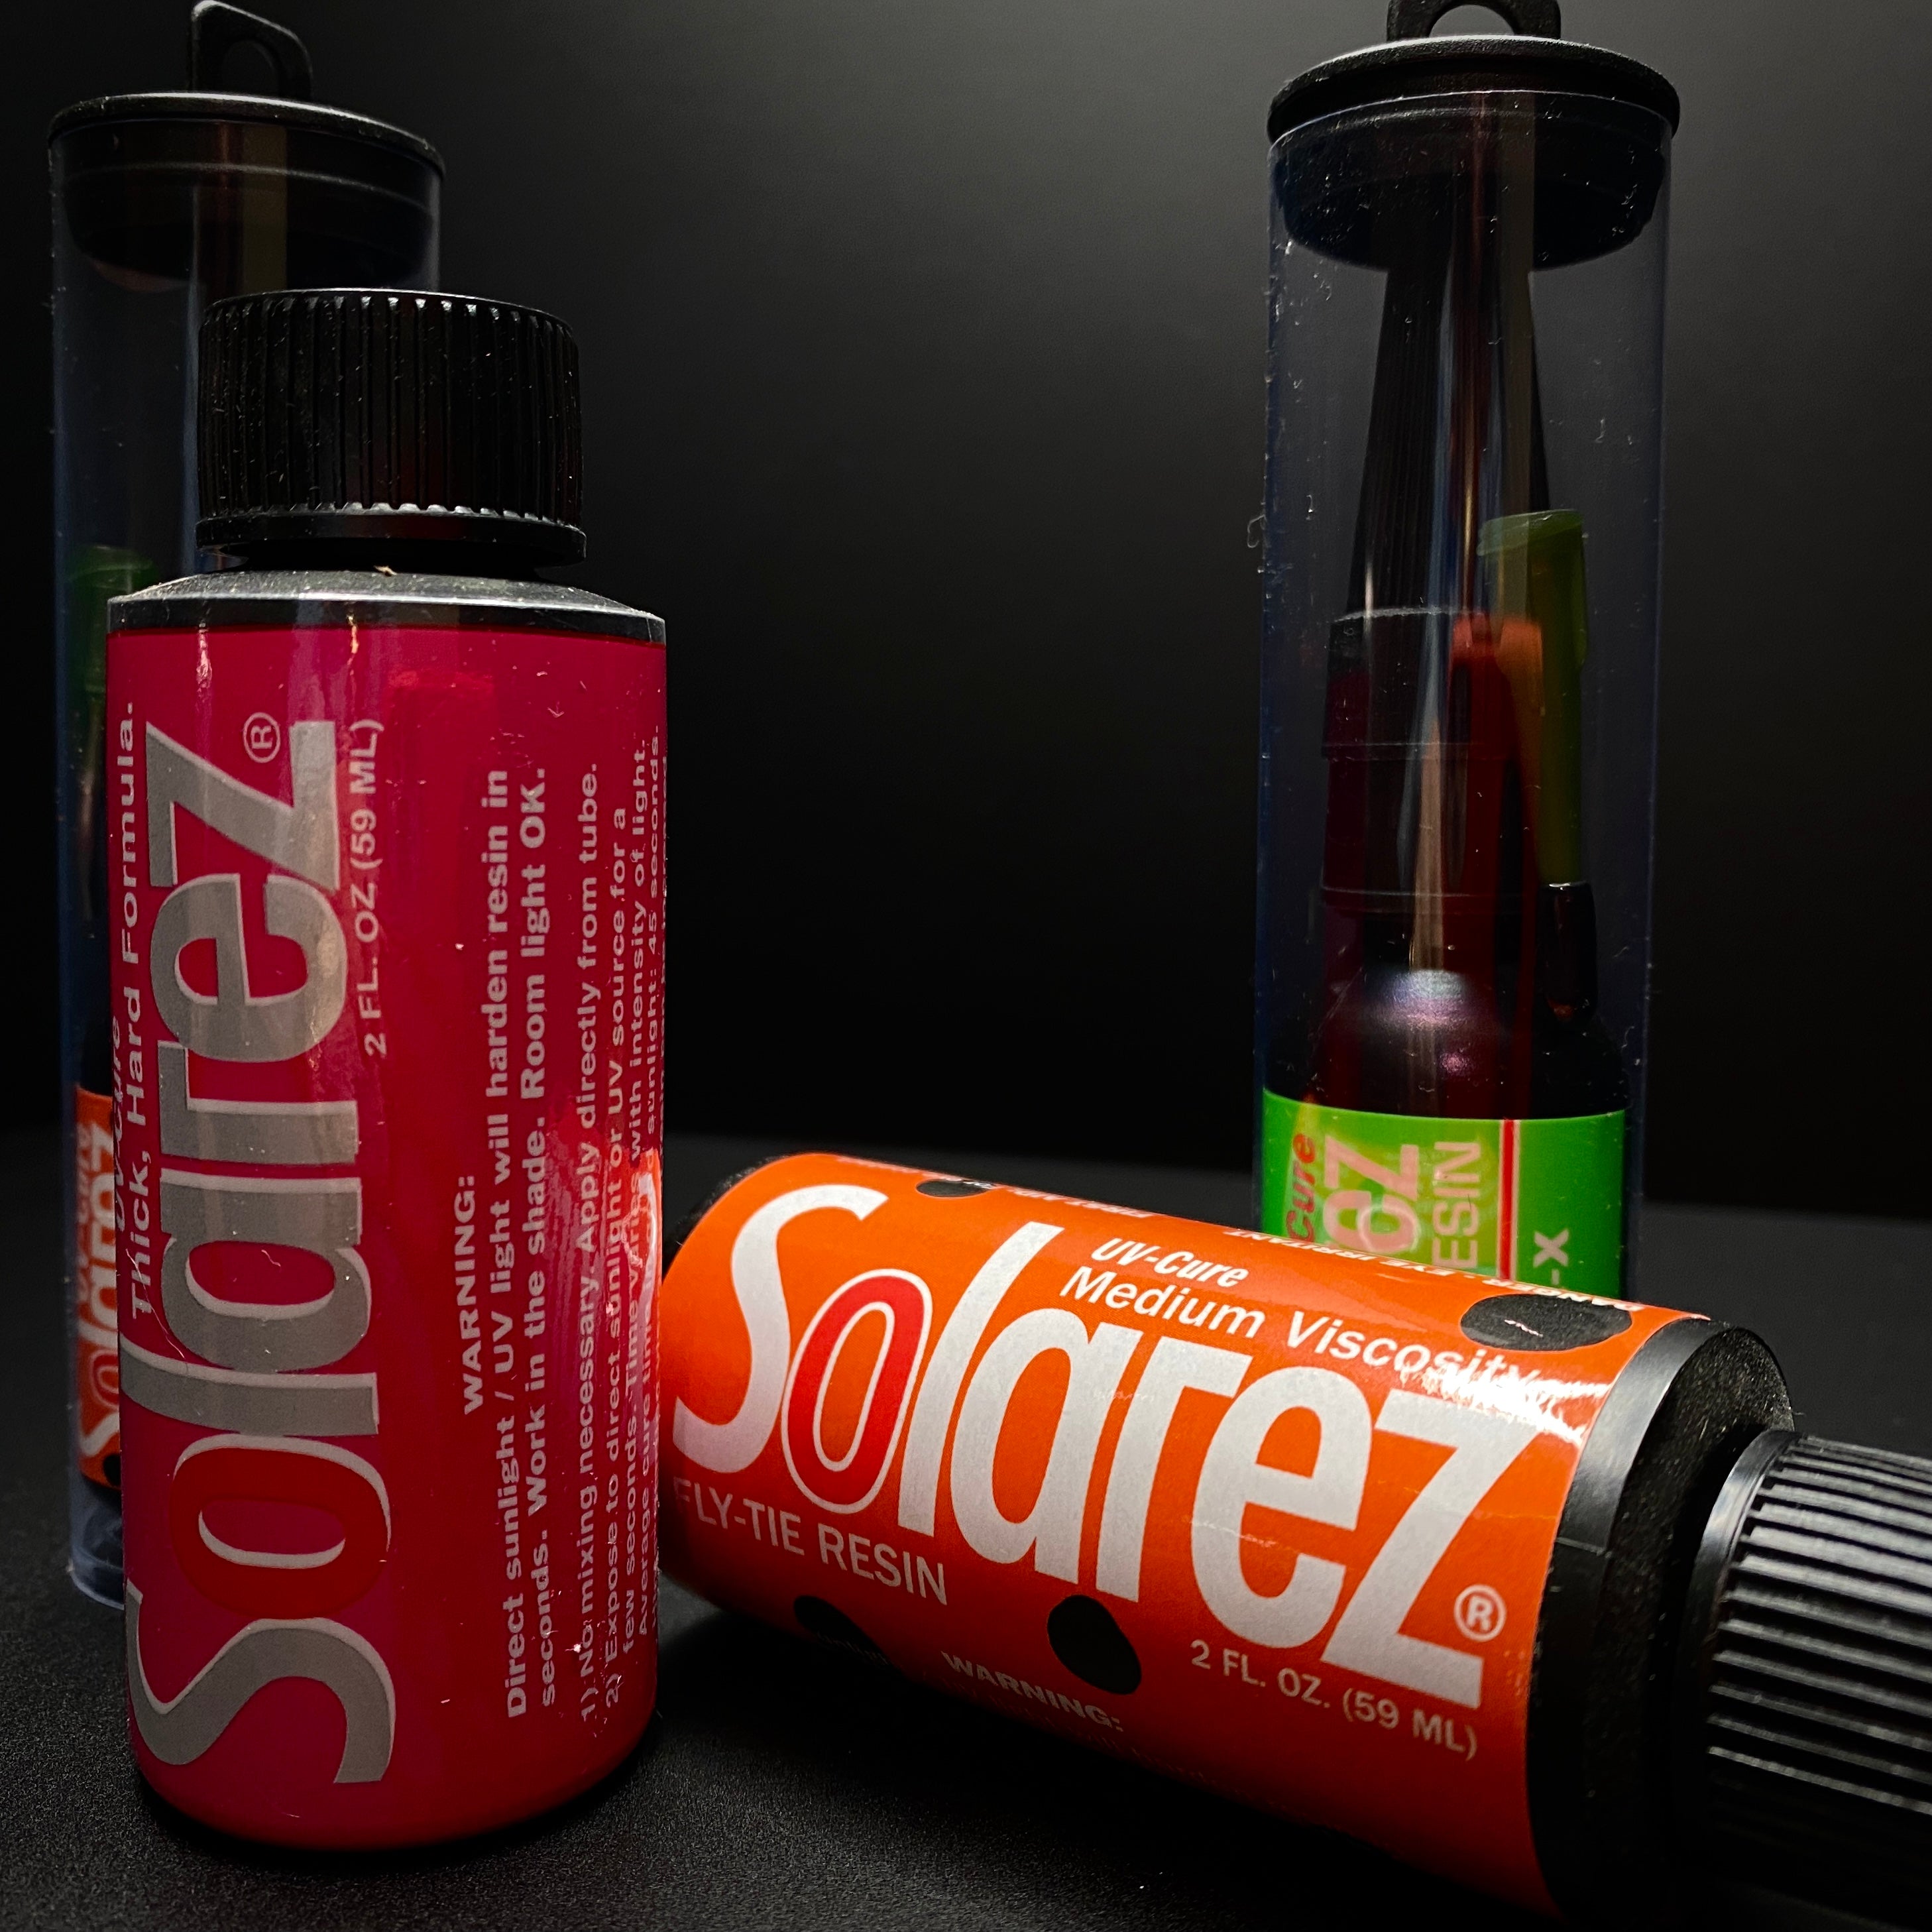 Solarez - UV Cure Resin Thick Hard / 4 oz